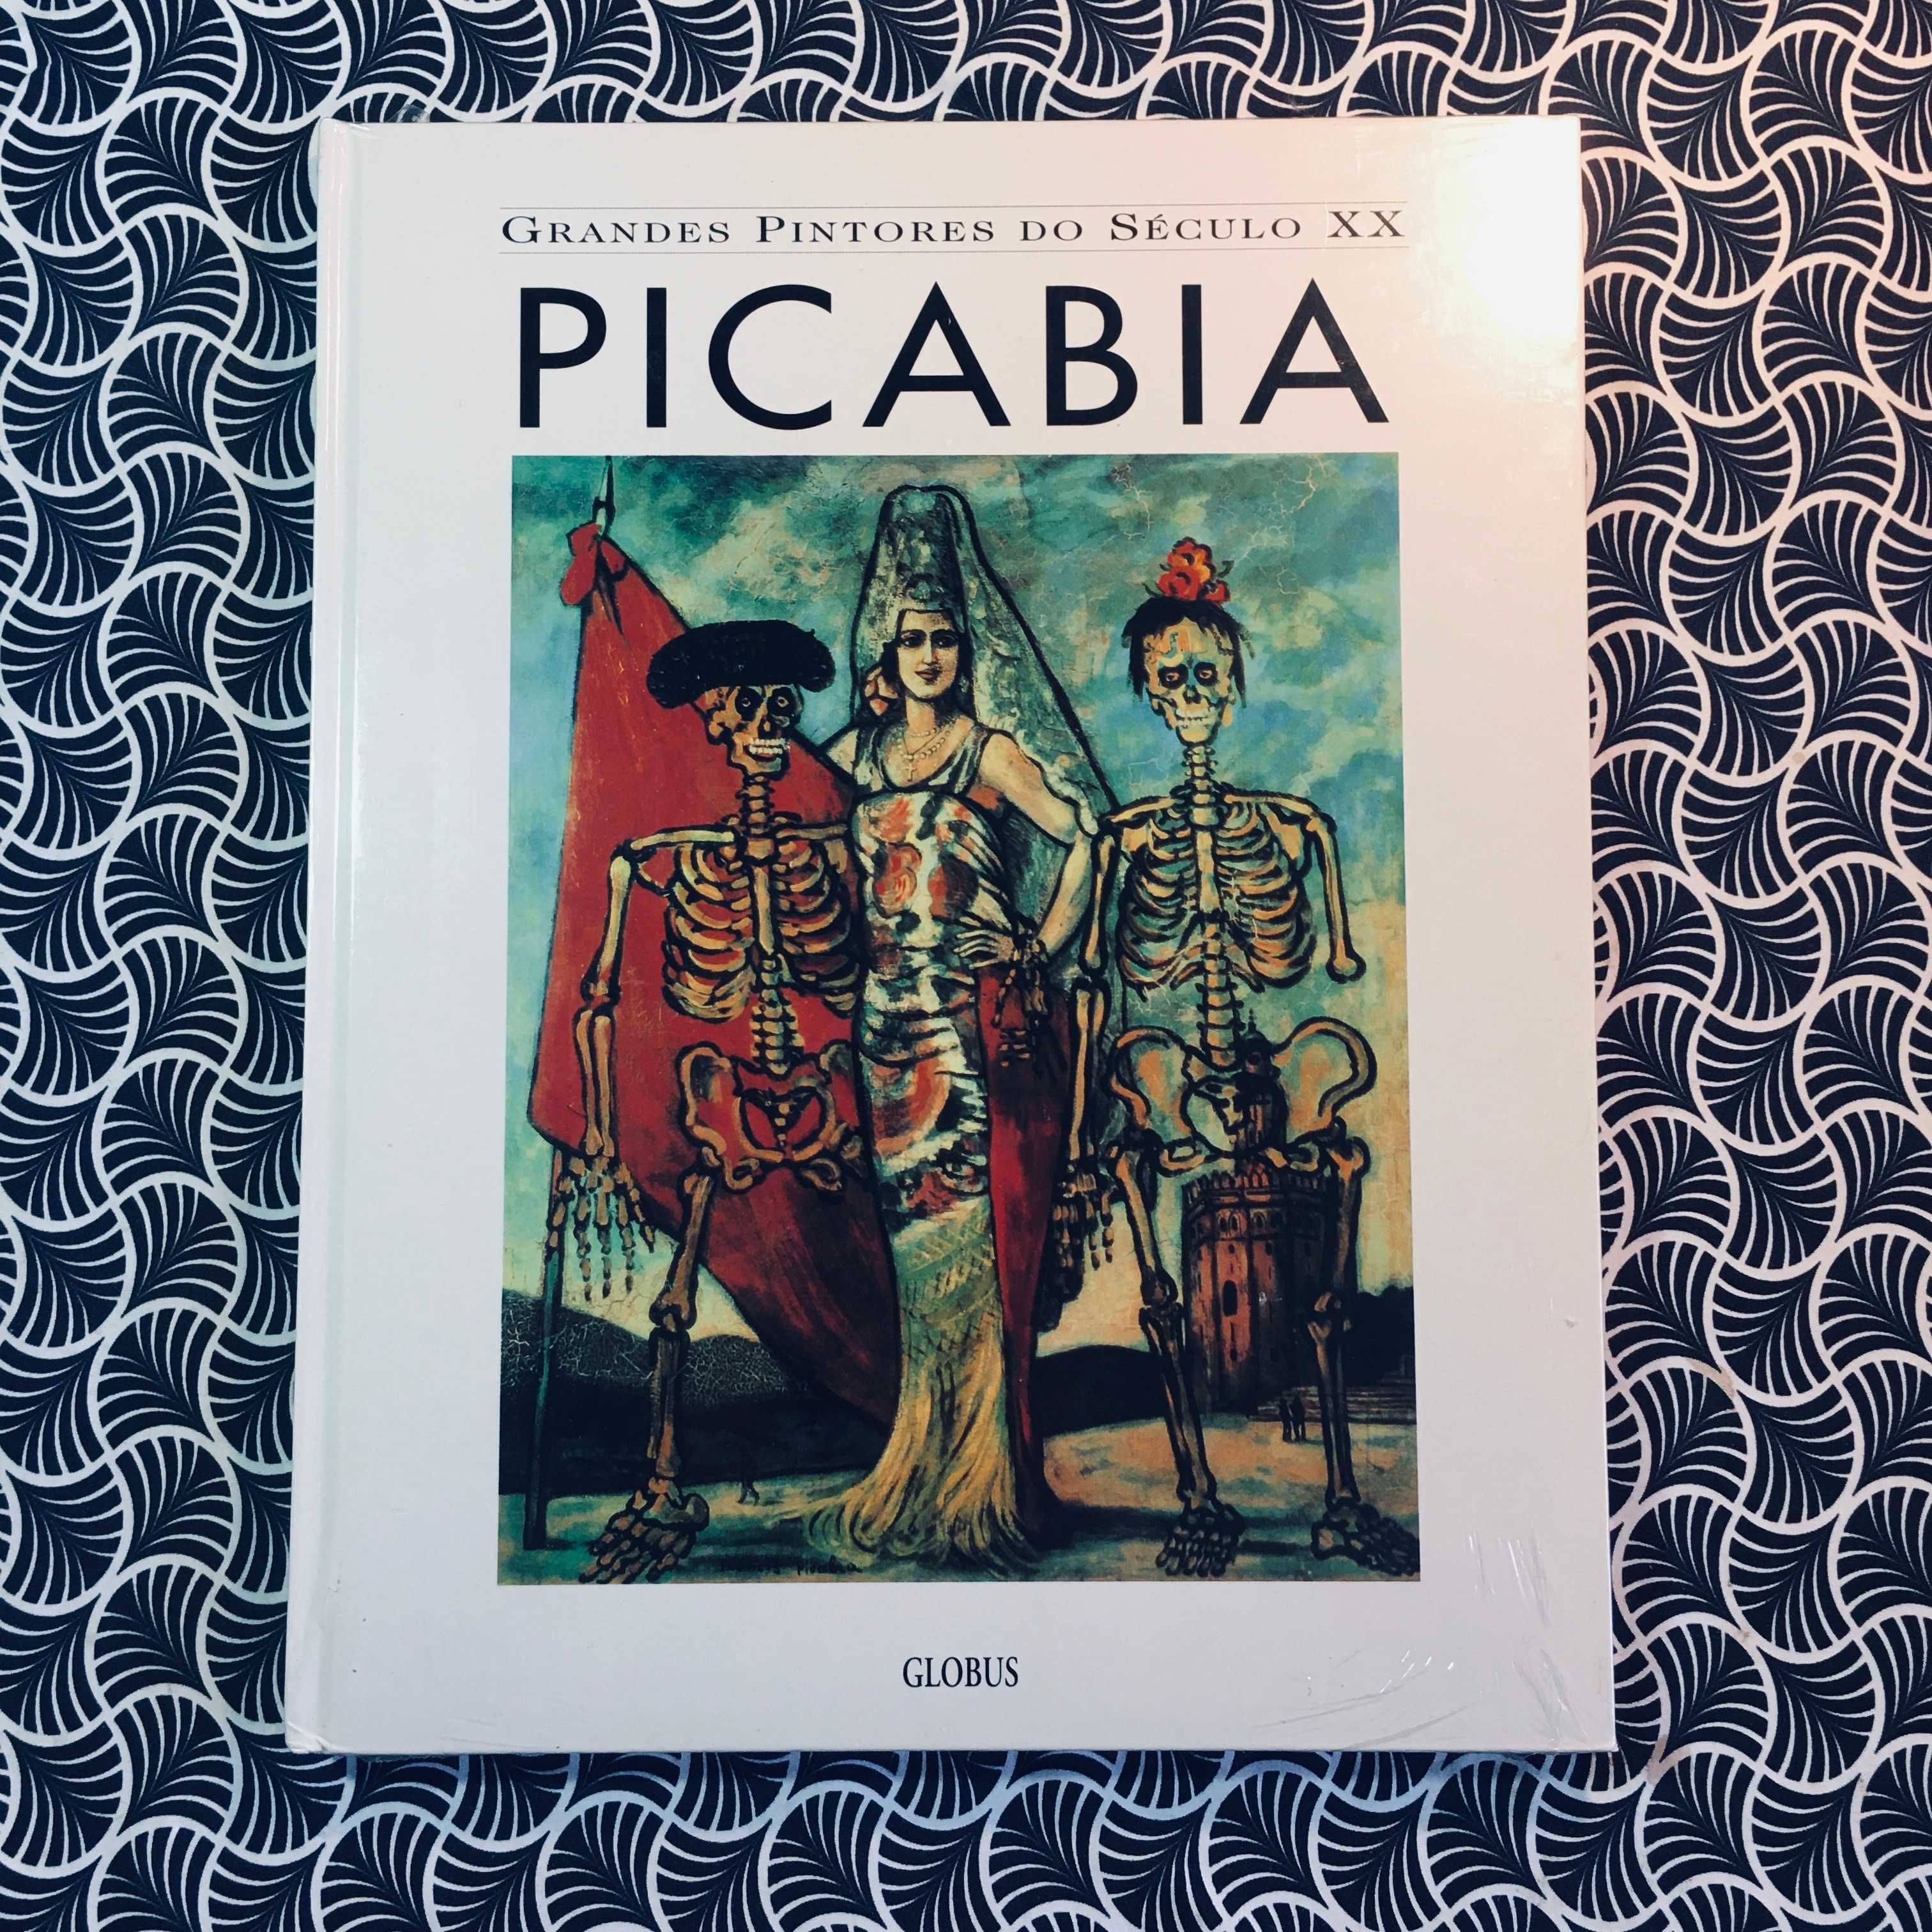 Picabia: Grandes Pintores do Século XX nº38